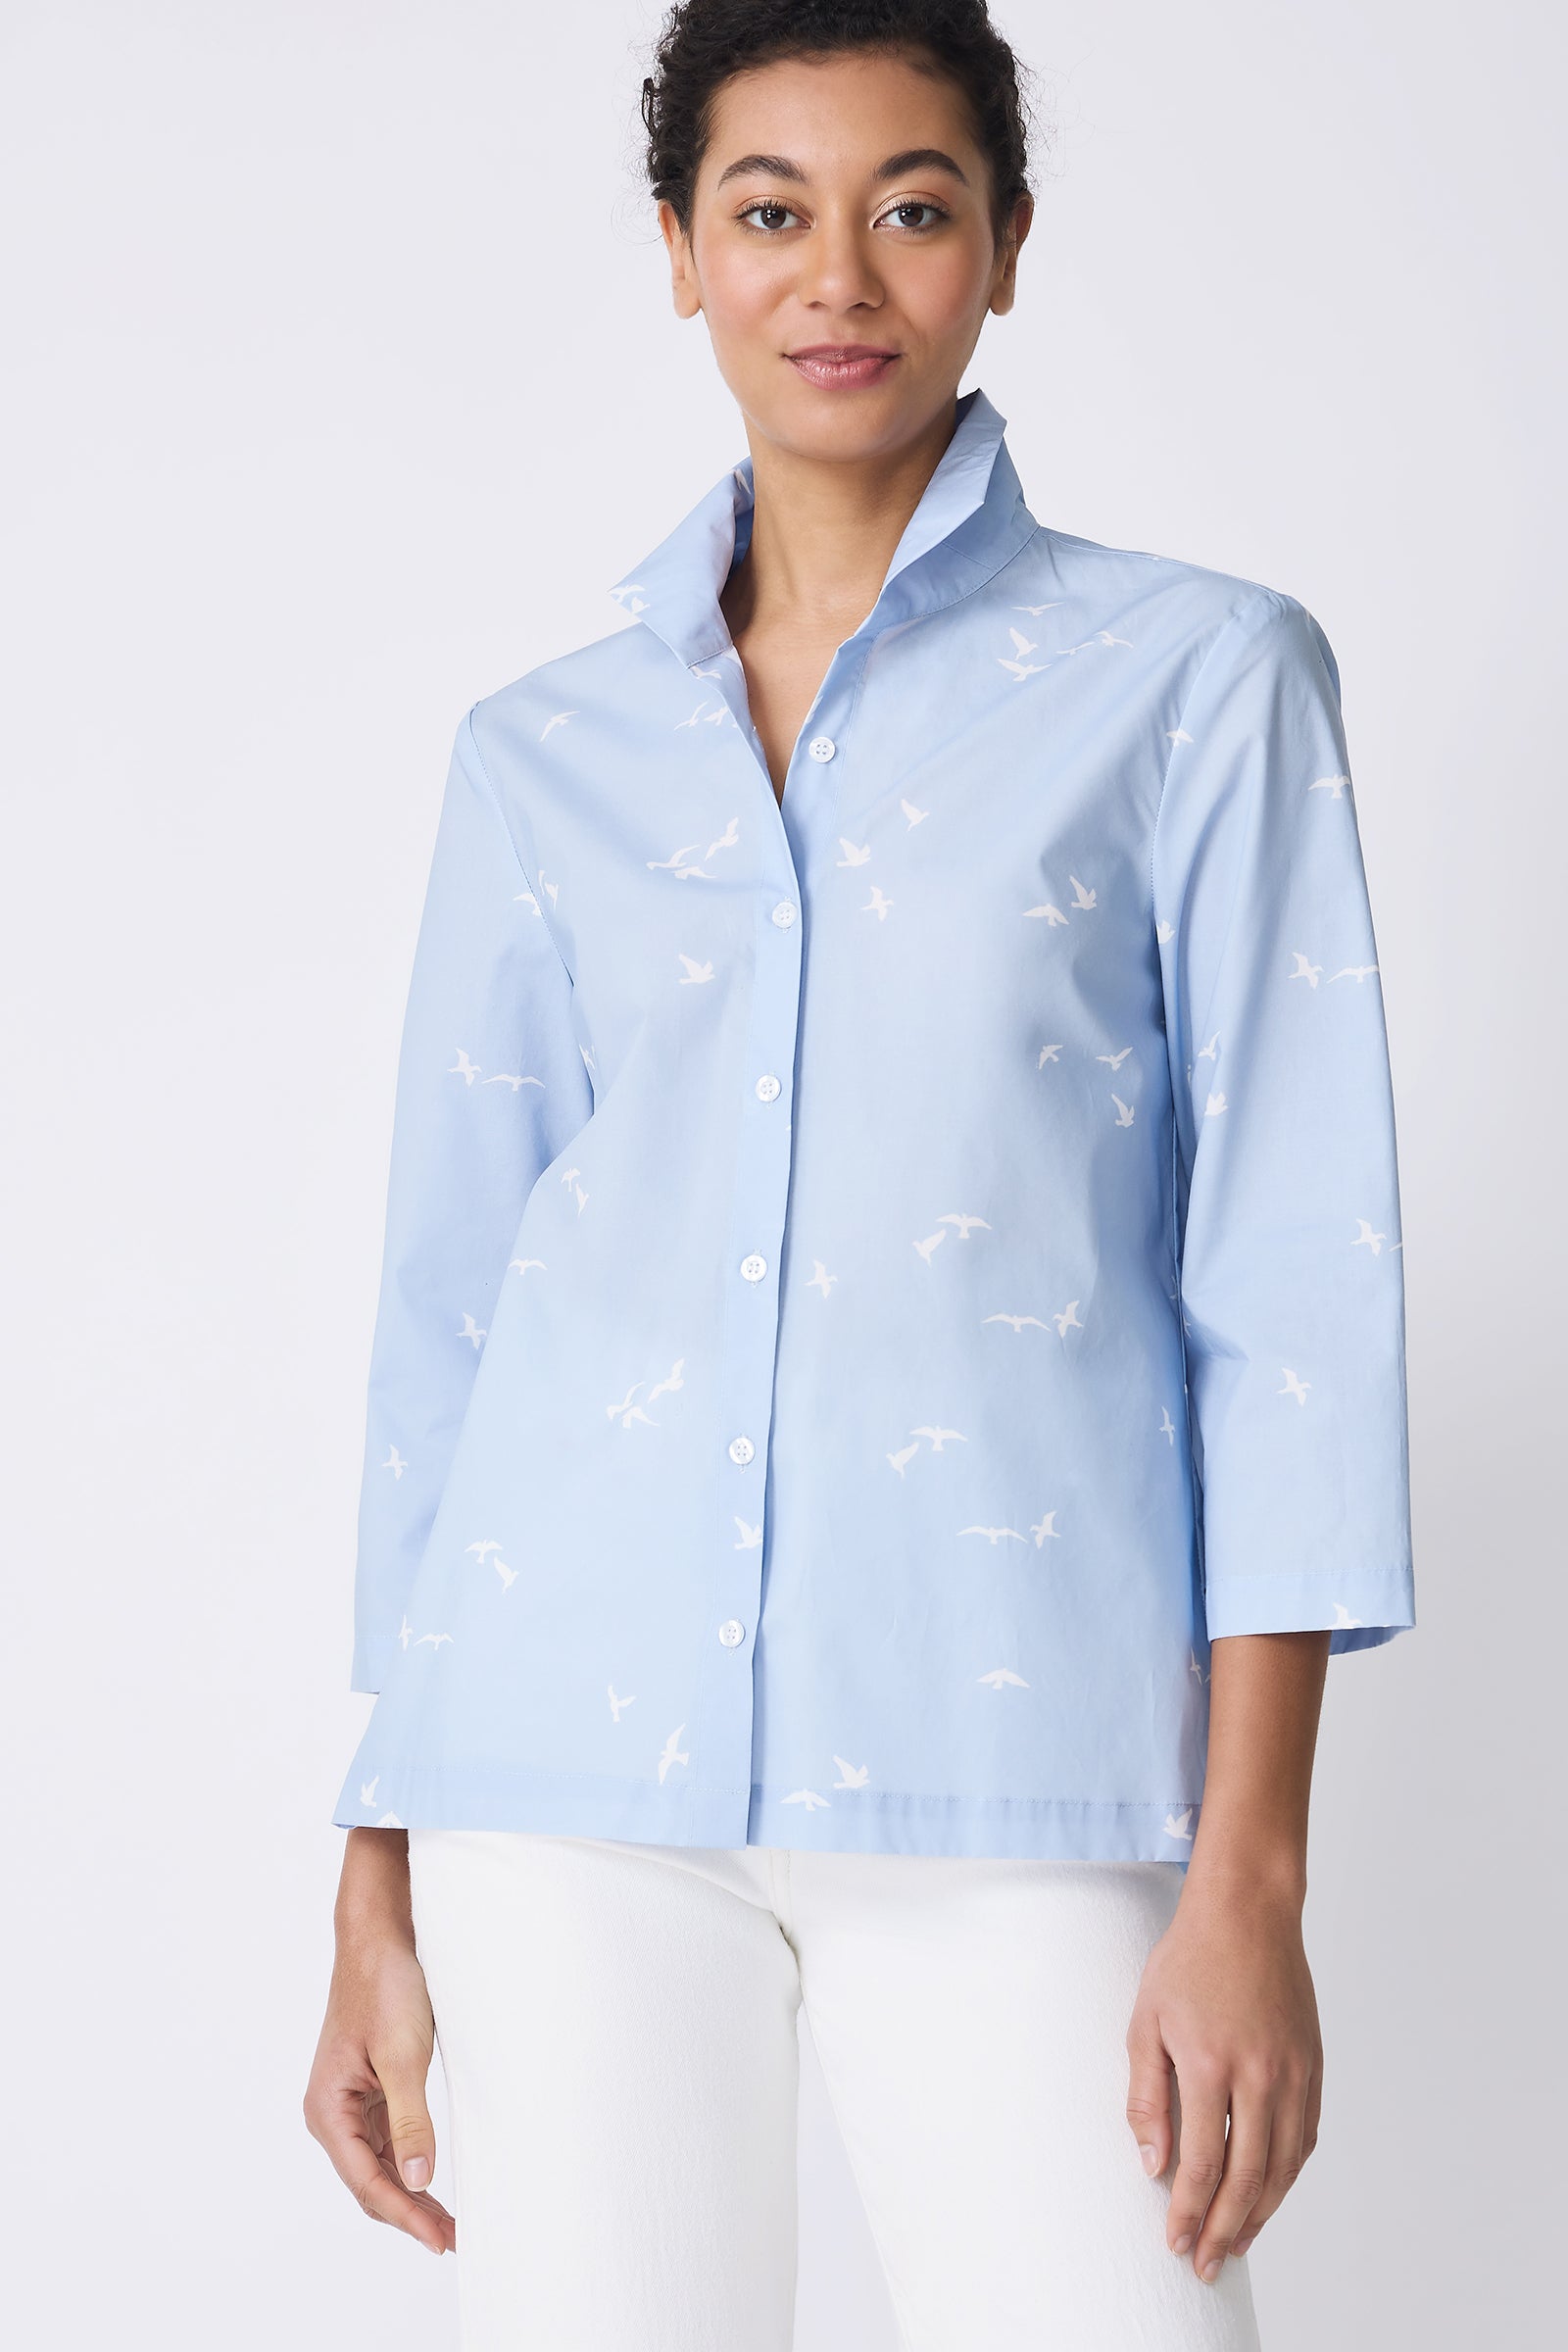 Kal Rieman 3/4 Sleeve Ginna Shirt in Oxford Blue Bird Print on model front view